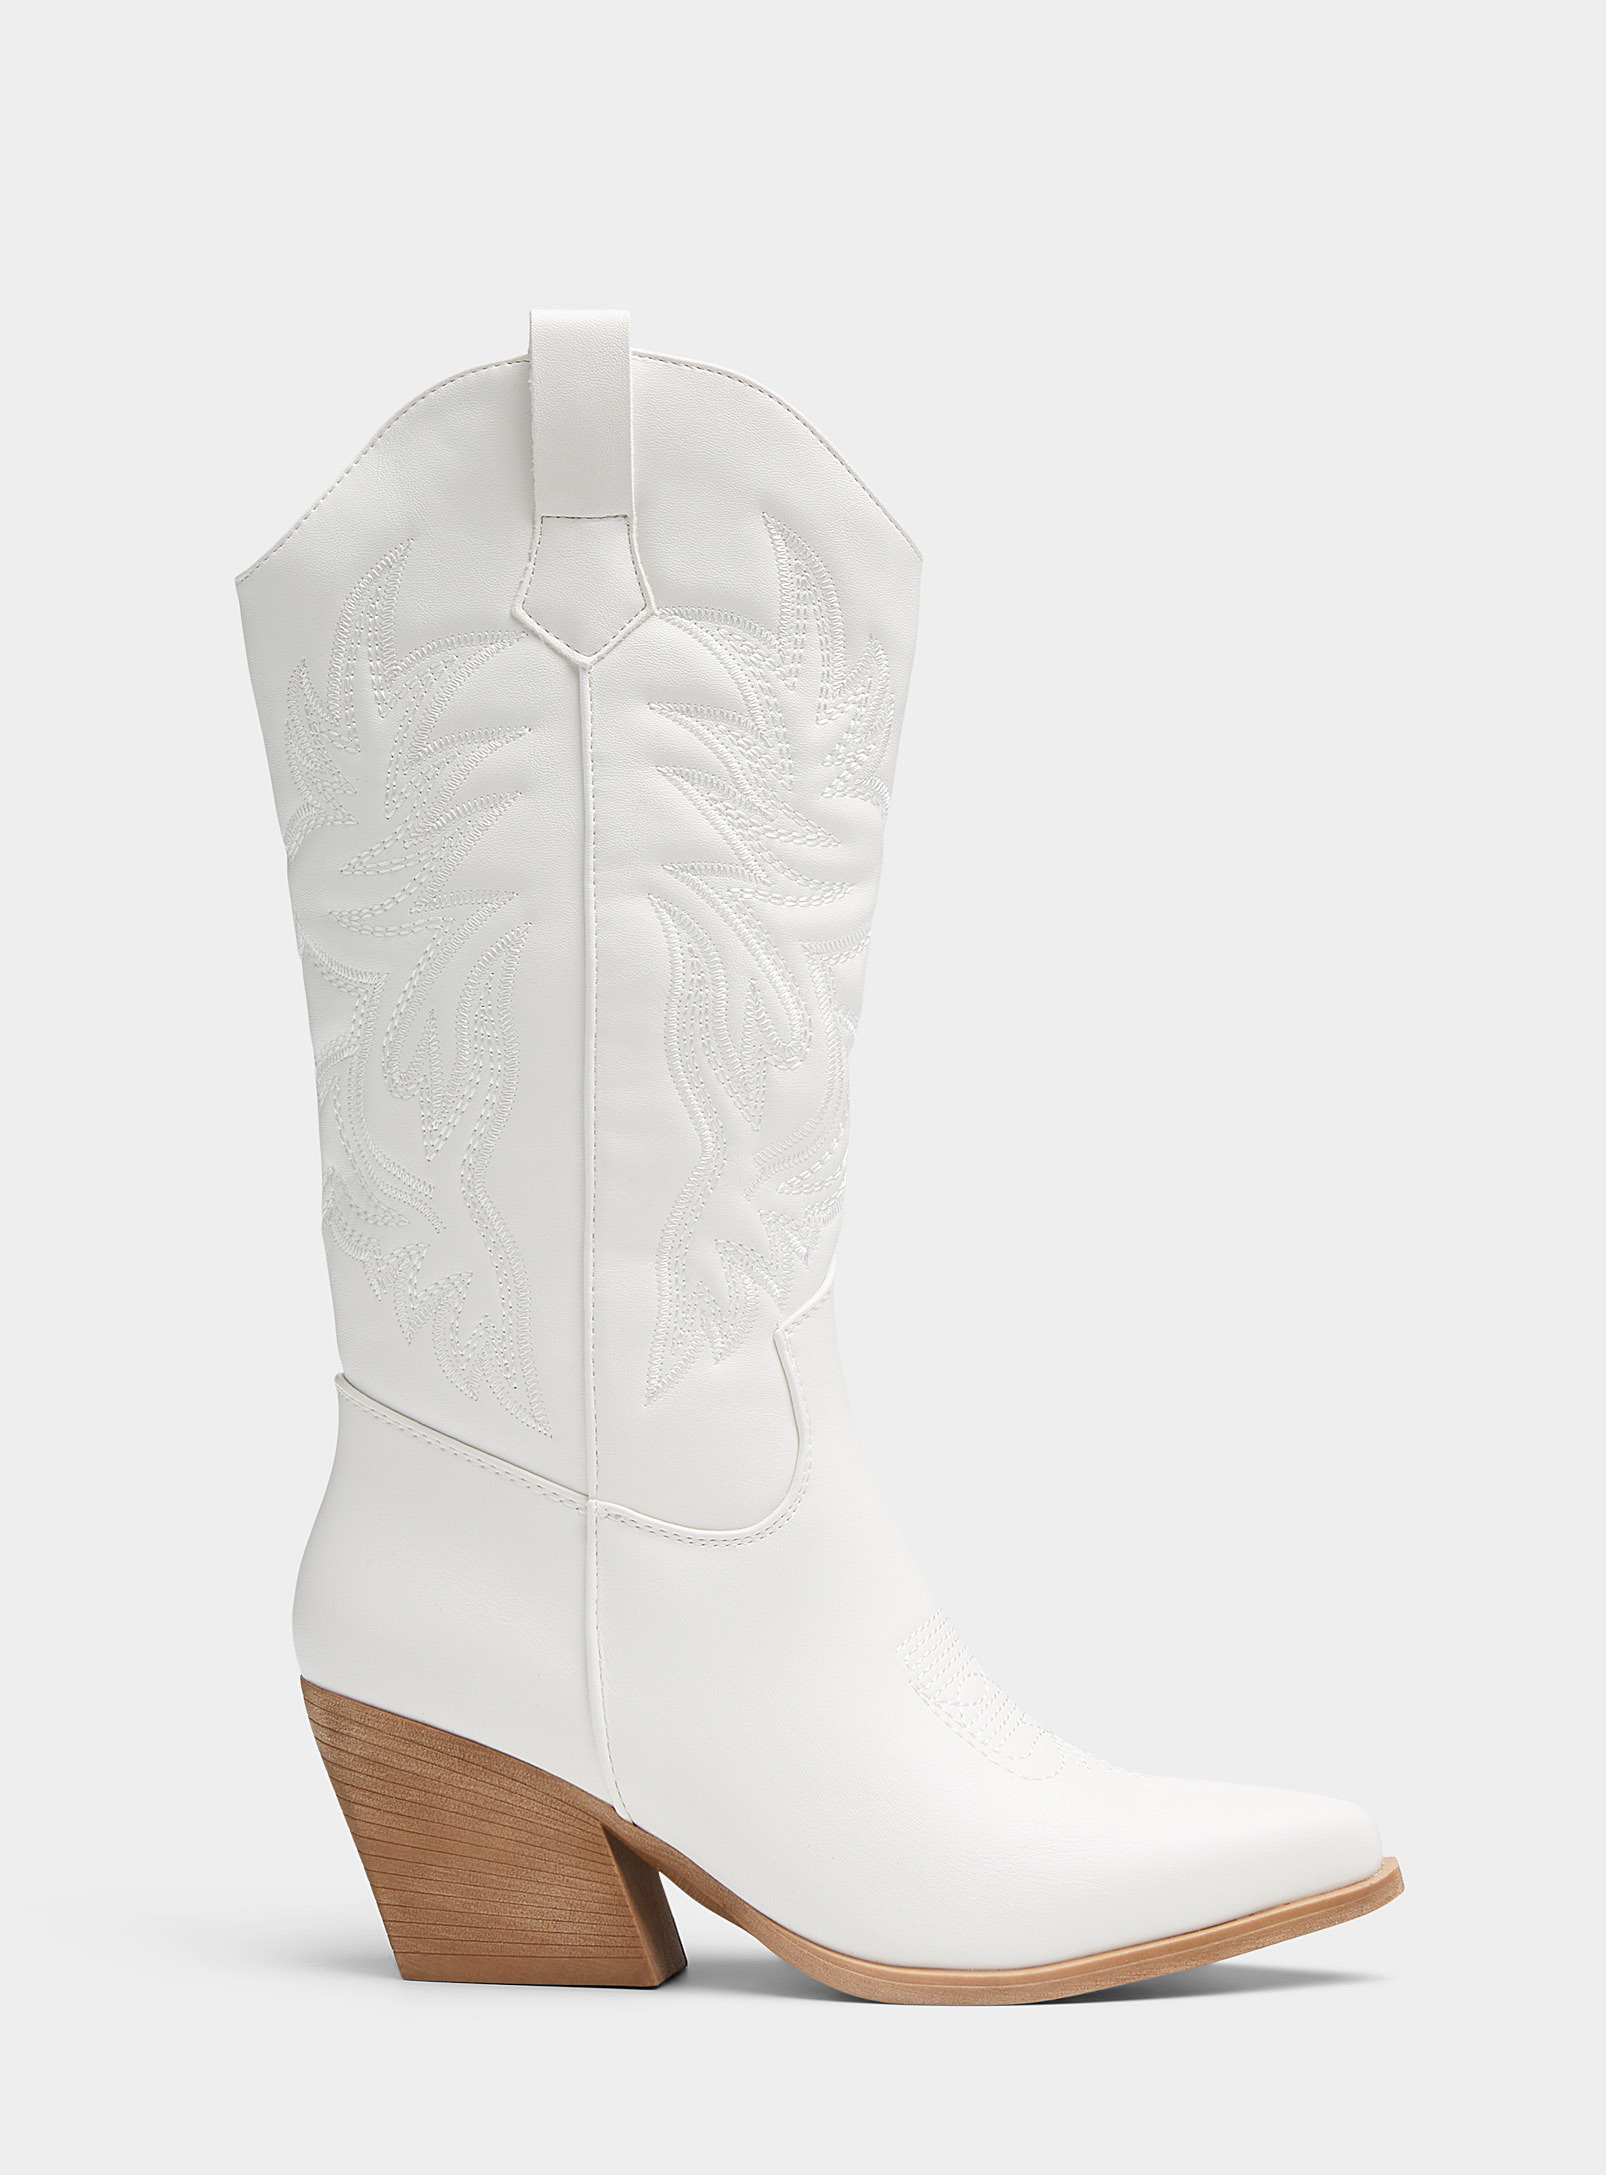 Simons - Women's White topstitched cowboy boots